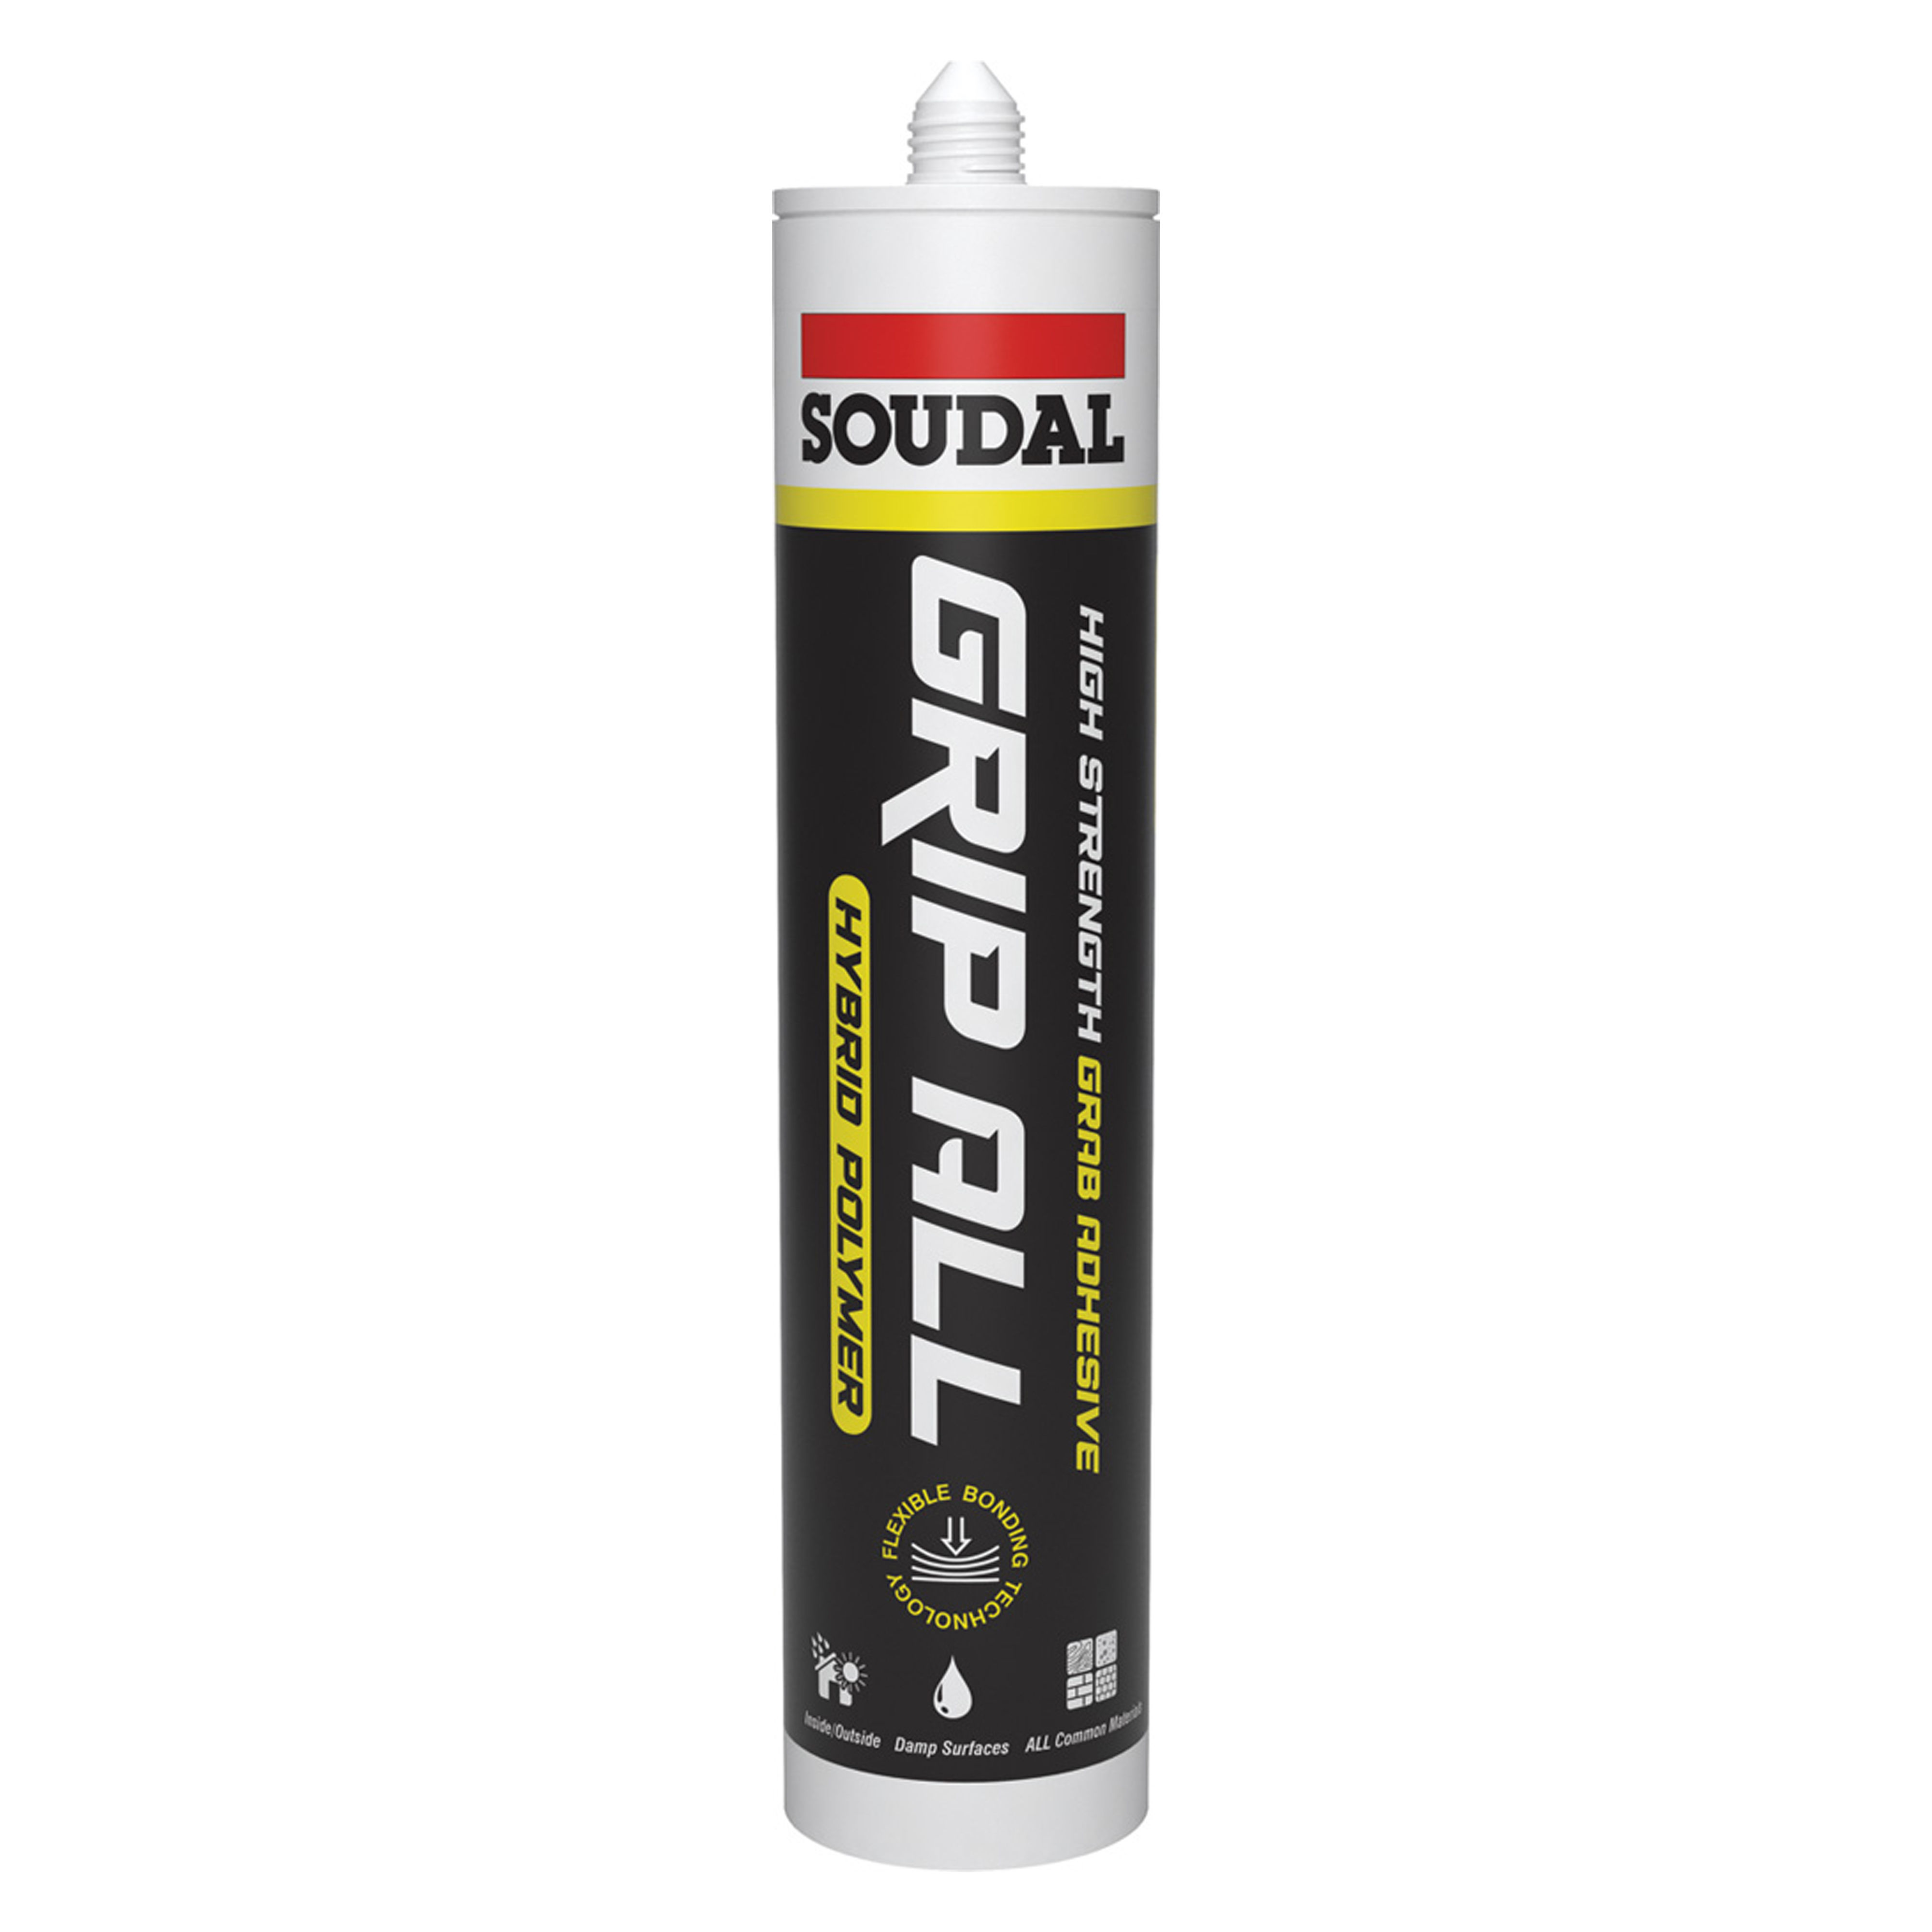 Soudal Grip All Hybrid Polymer White 290ml